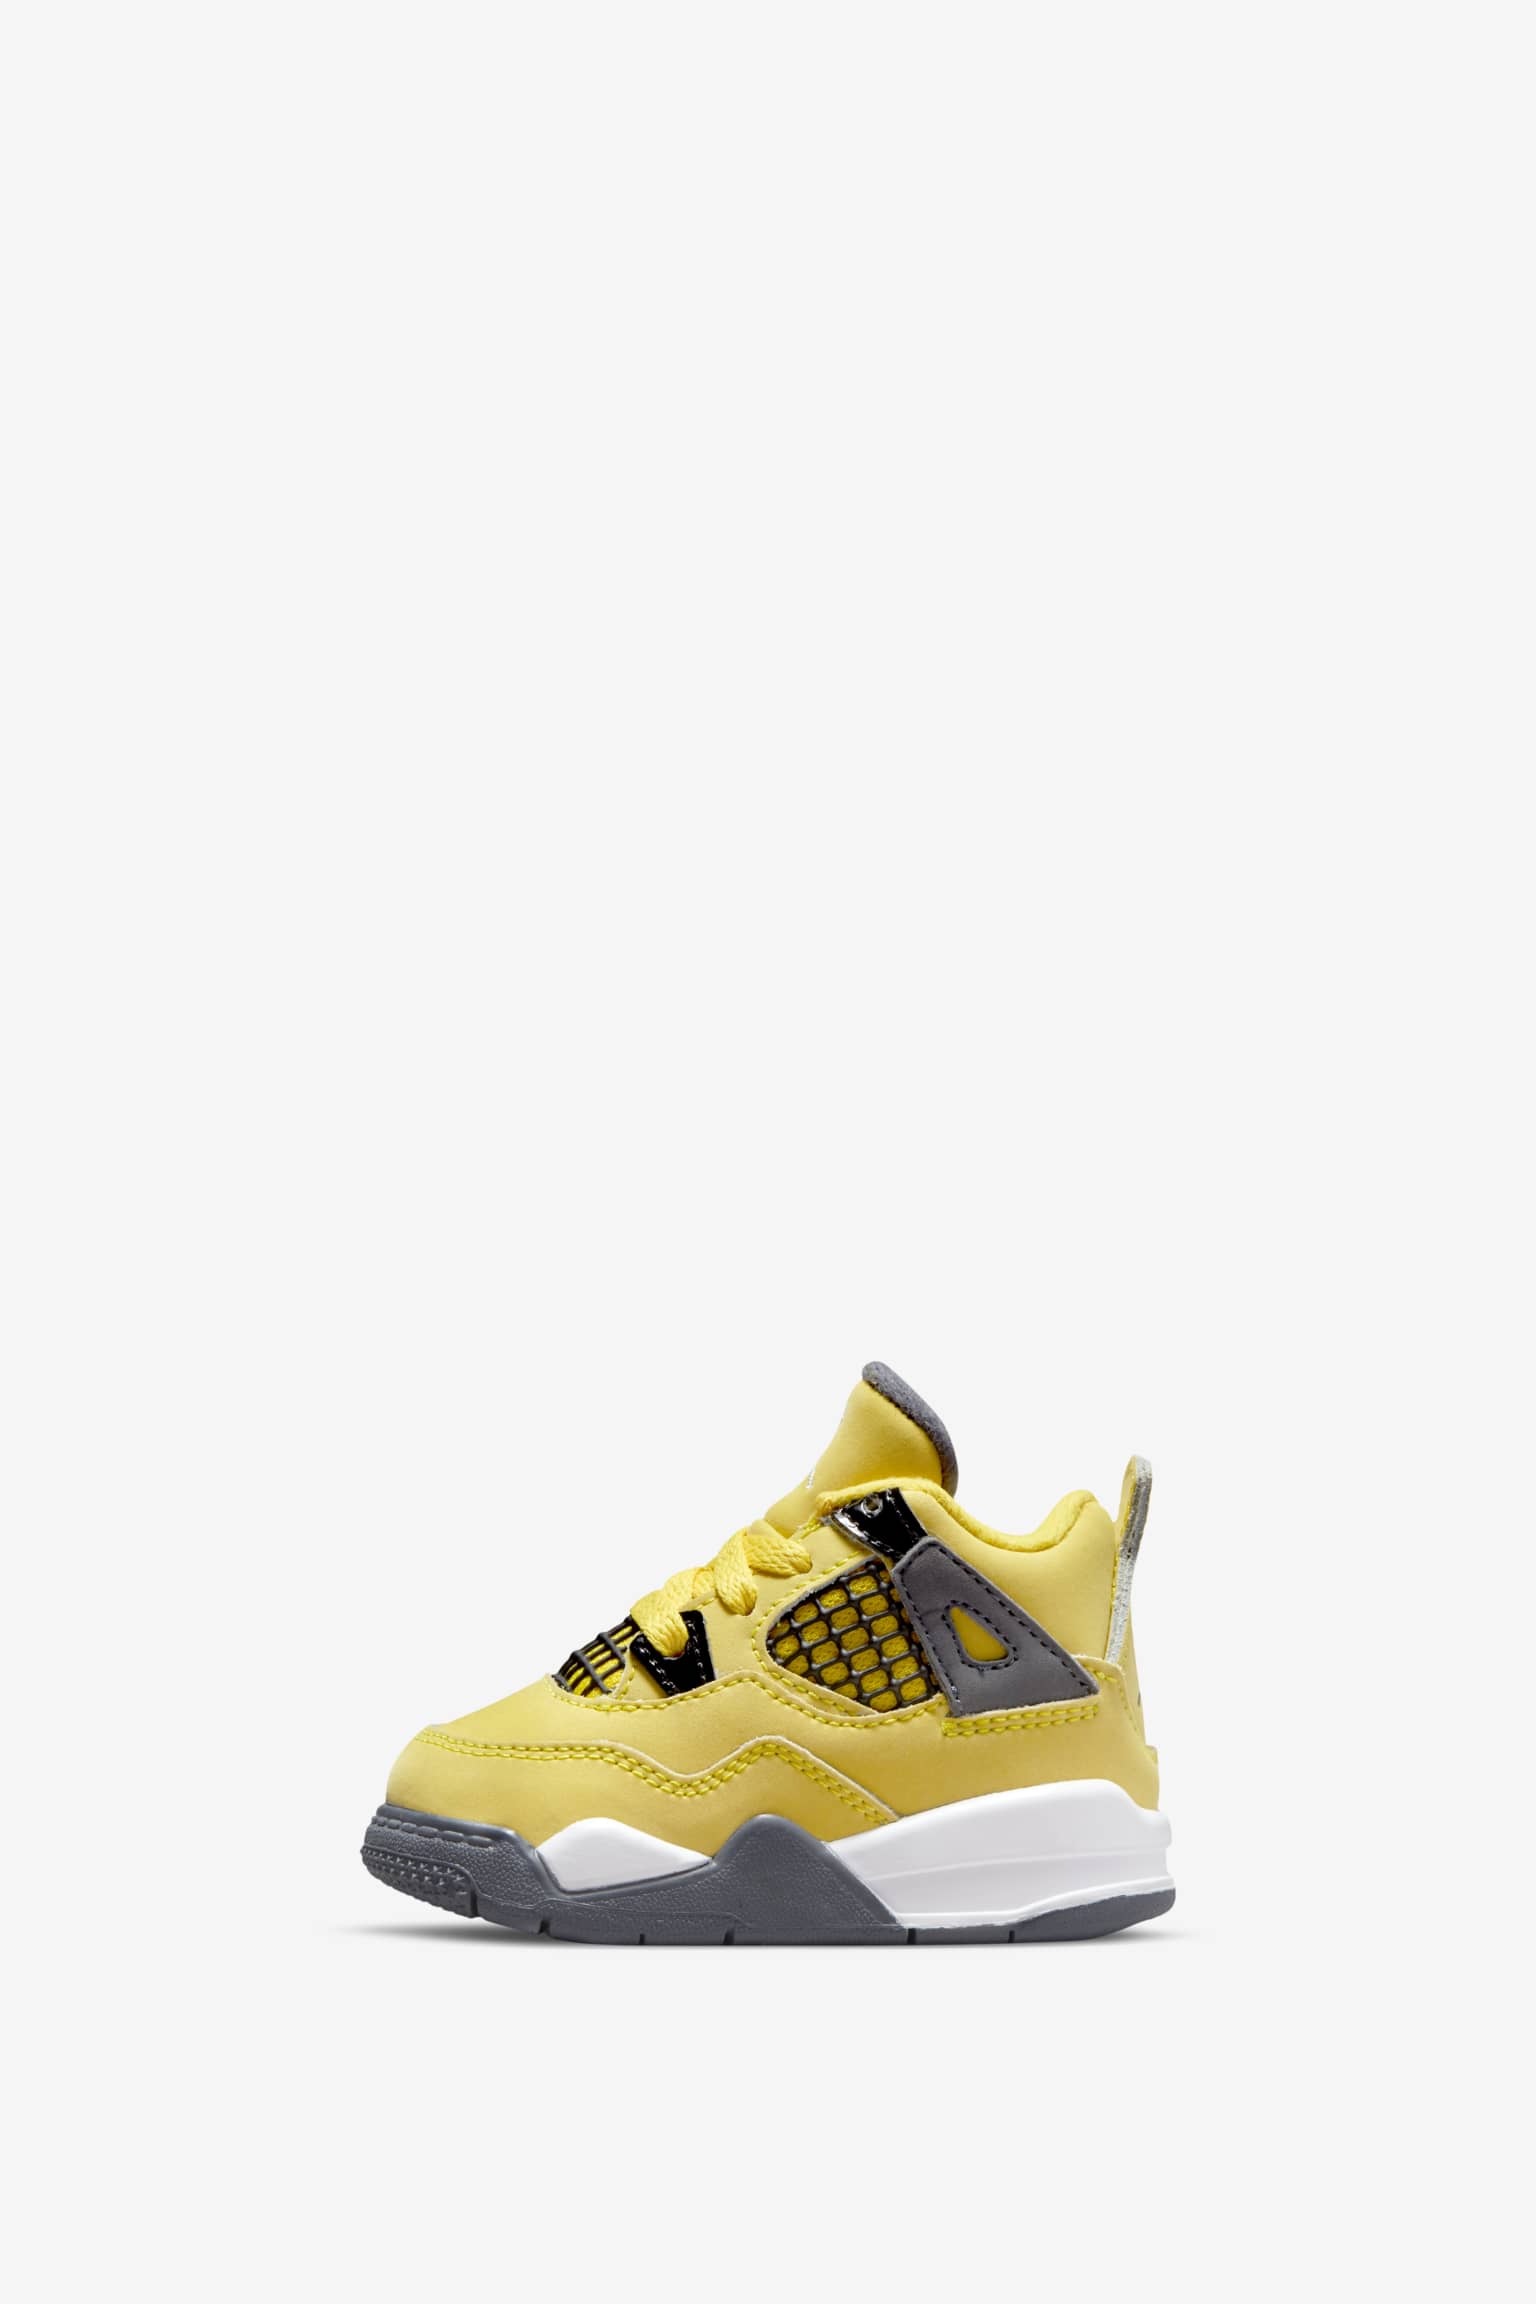 Air Jordan 4 &#039;Tour Yellow&#039; Release Date. Nike SNKRS PH